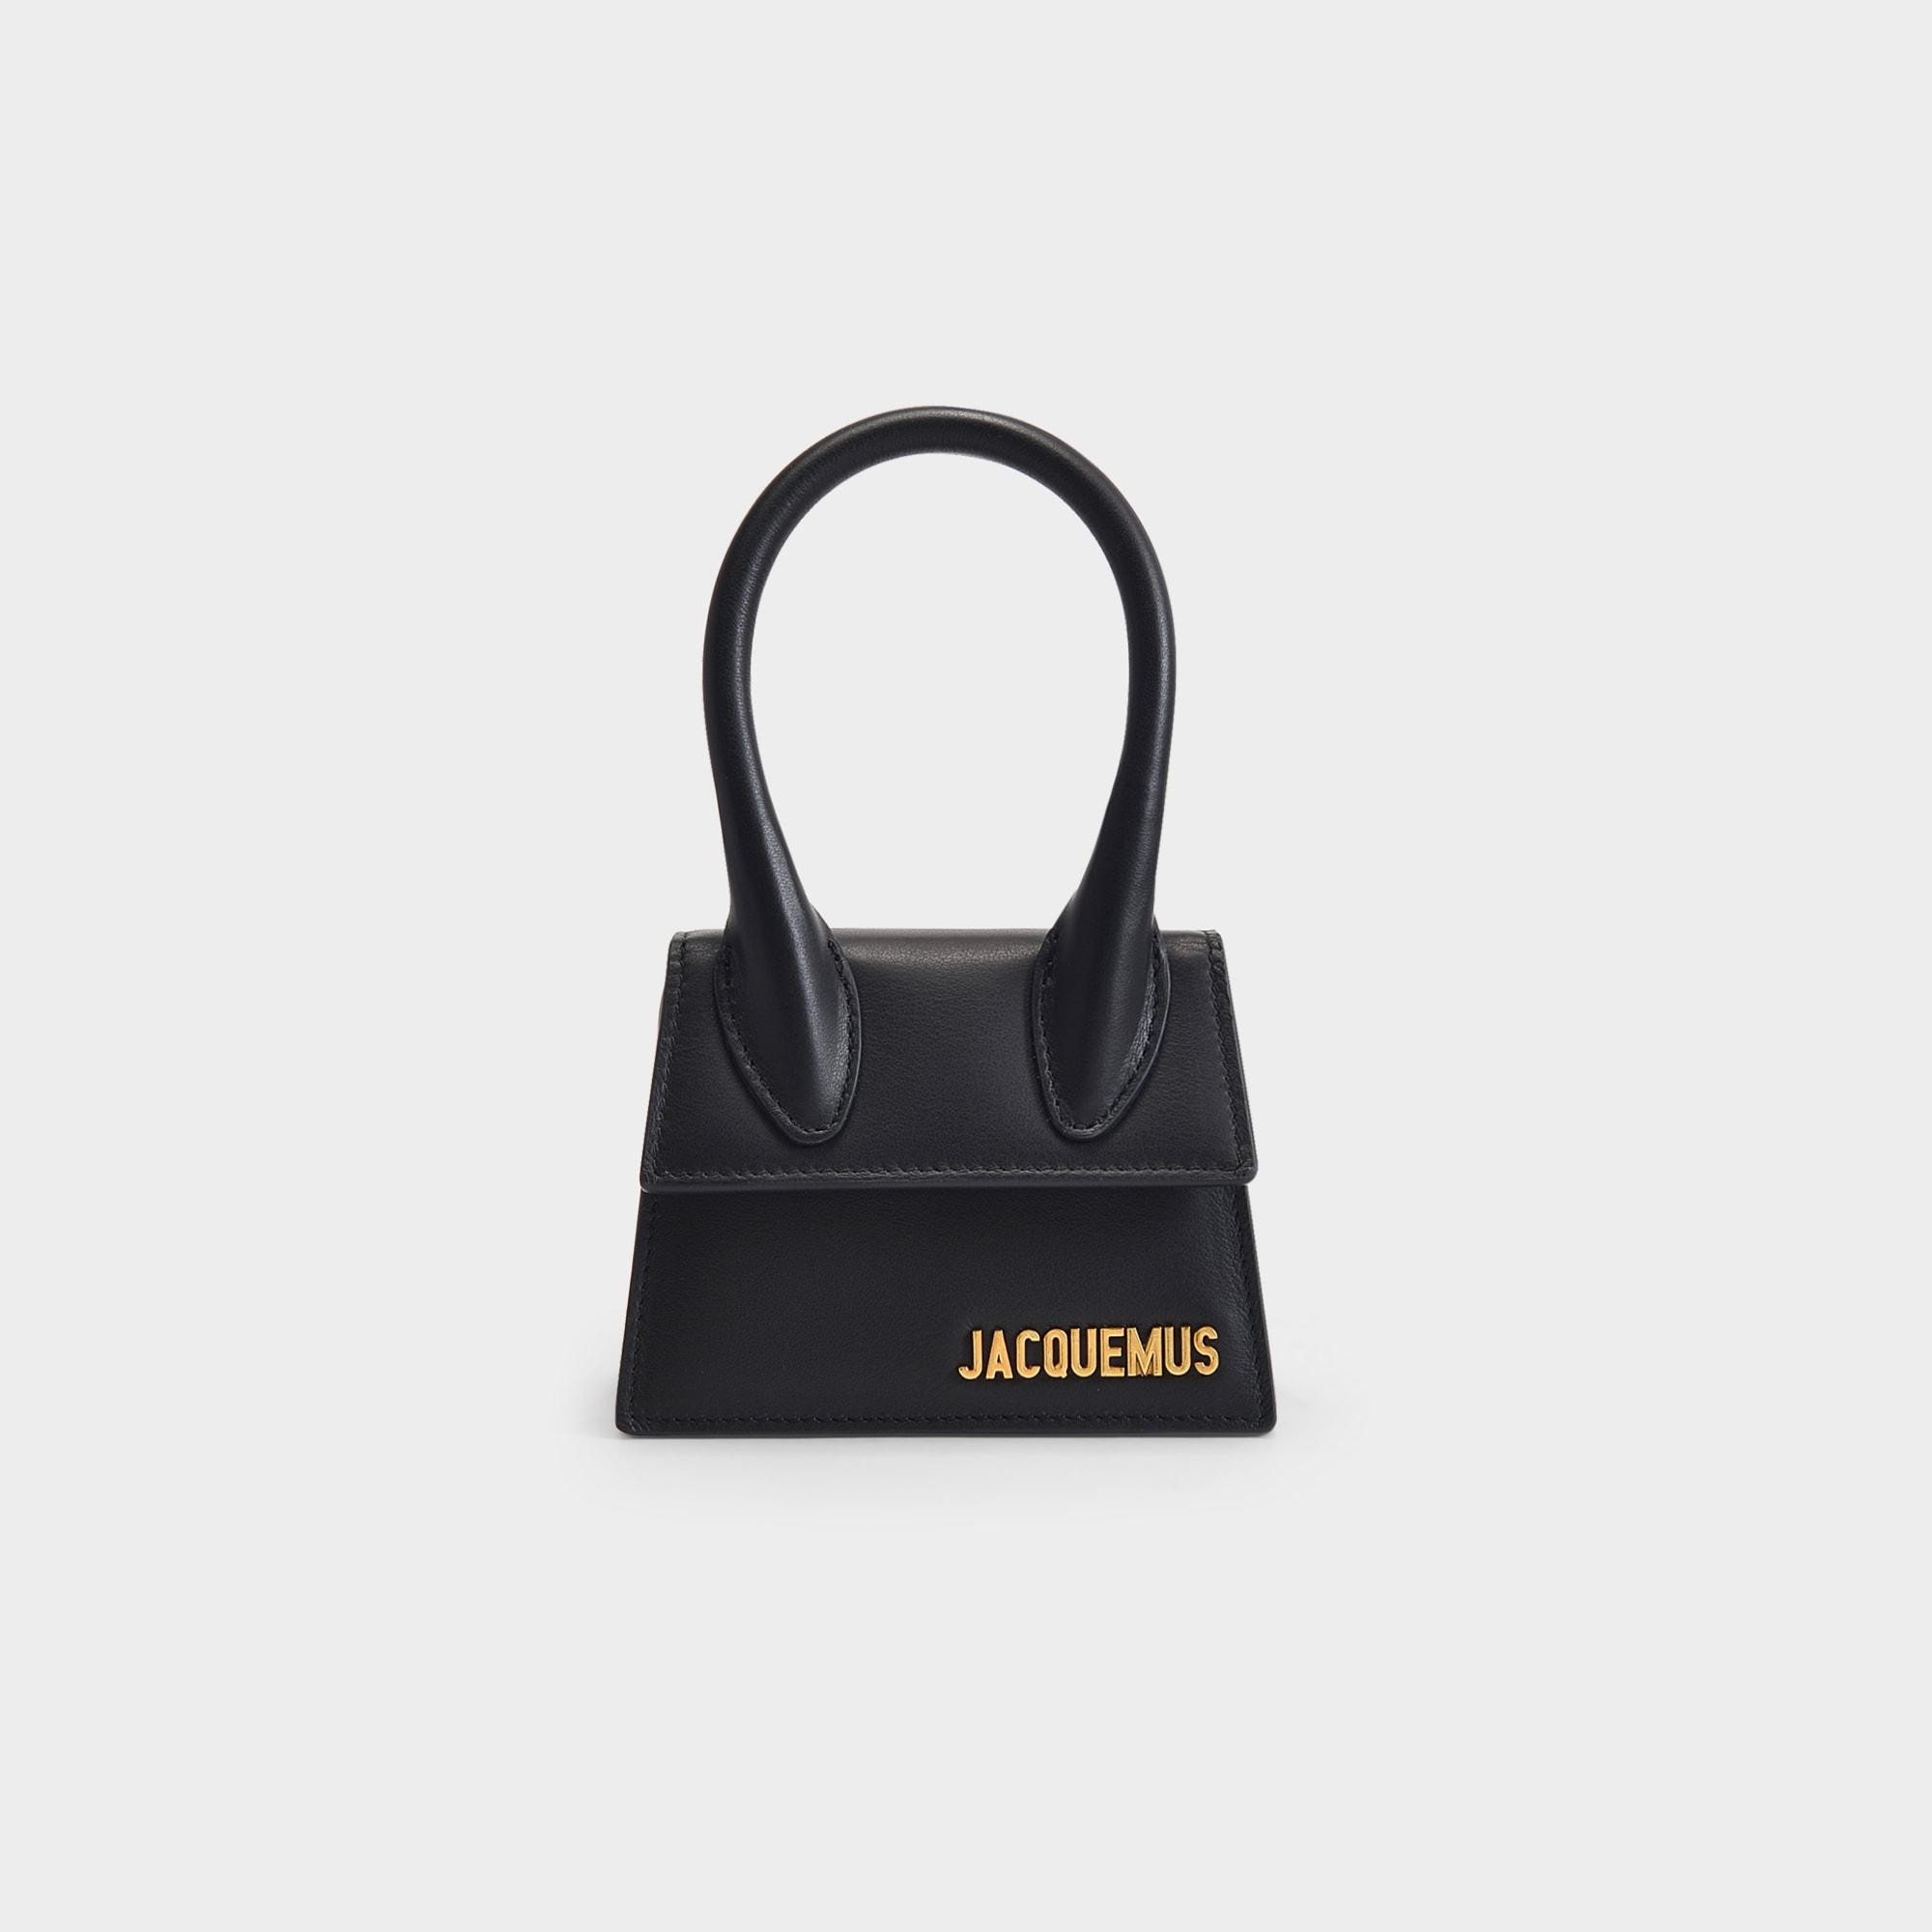 Jacquemus Le Chiquito Leather Mini Bag in Black | Lyst